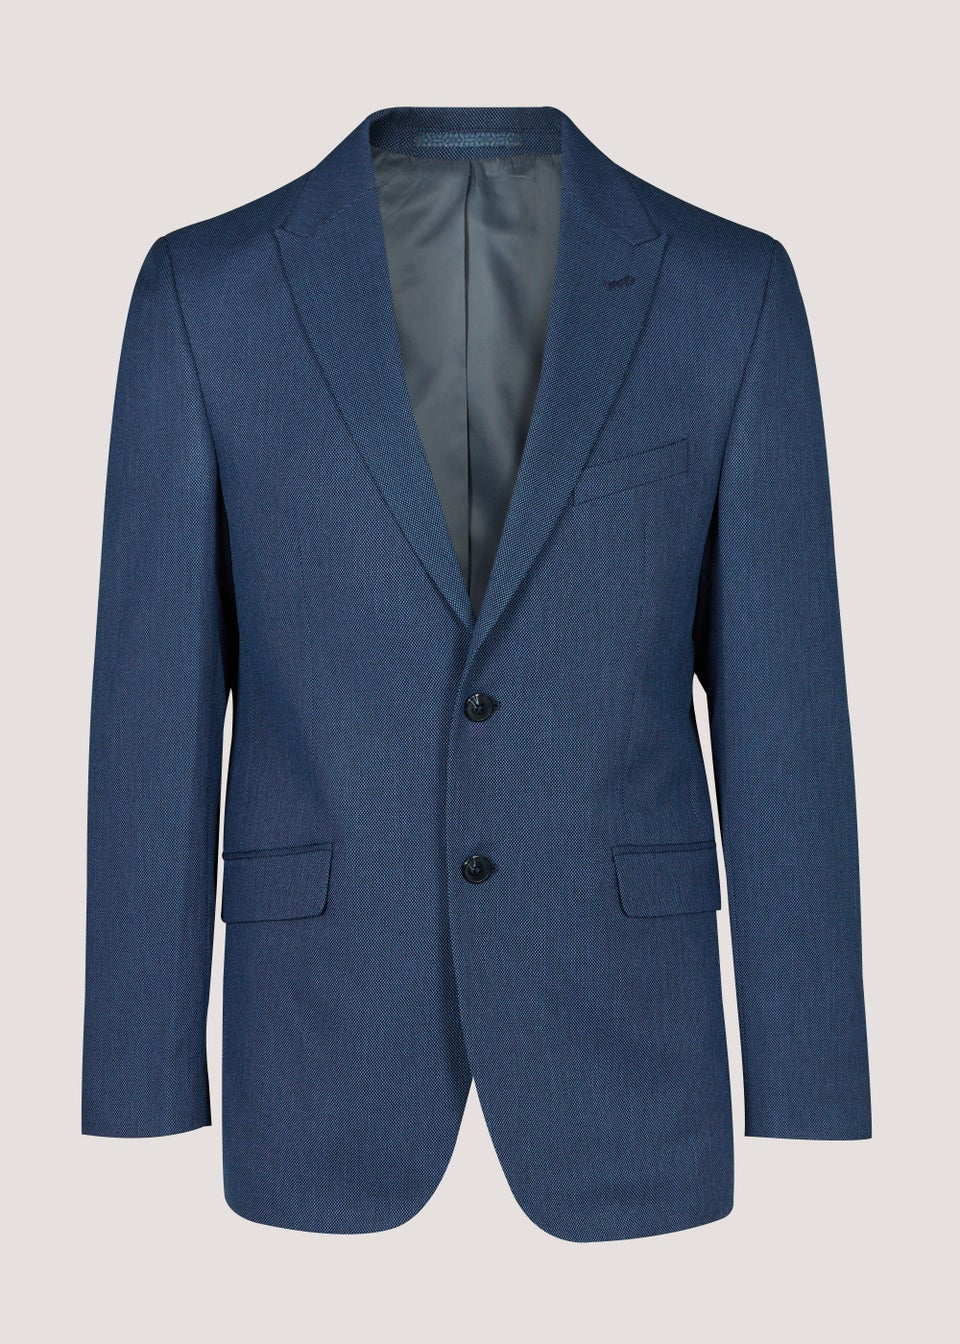 Taylor & Wright Douglas Blue Tailored Fit Suit Jacket